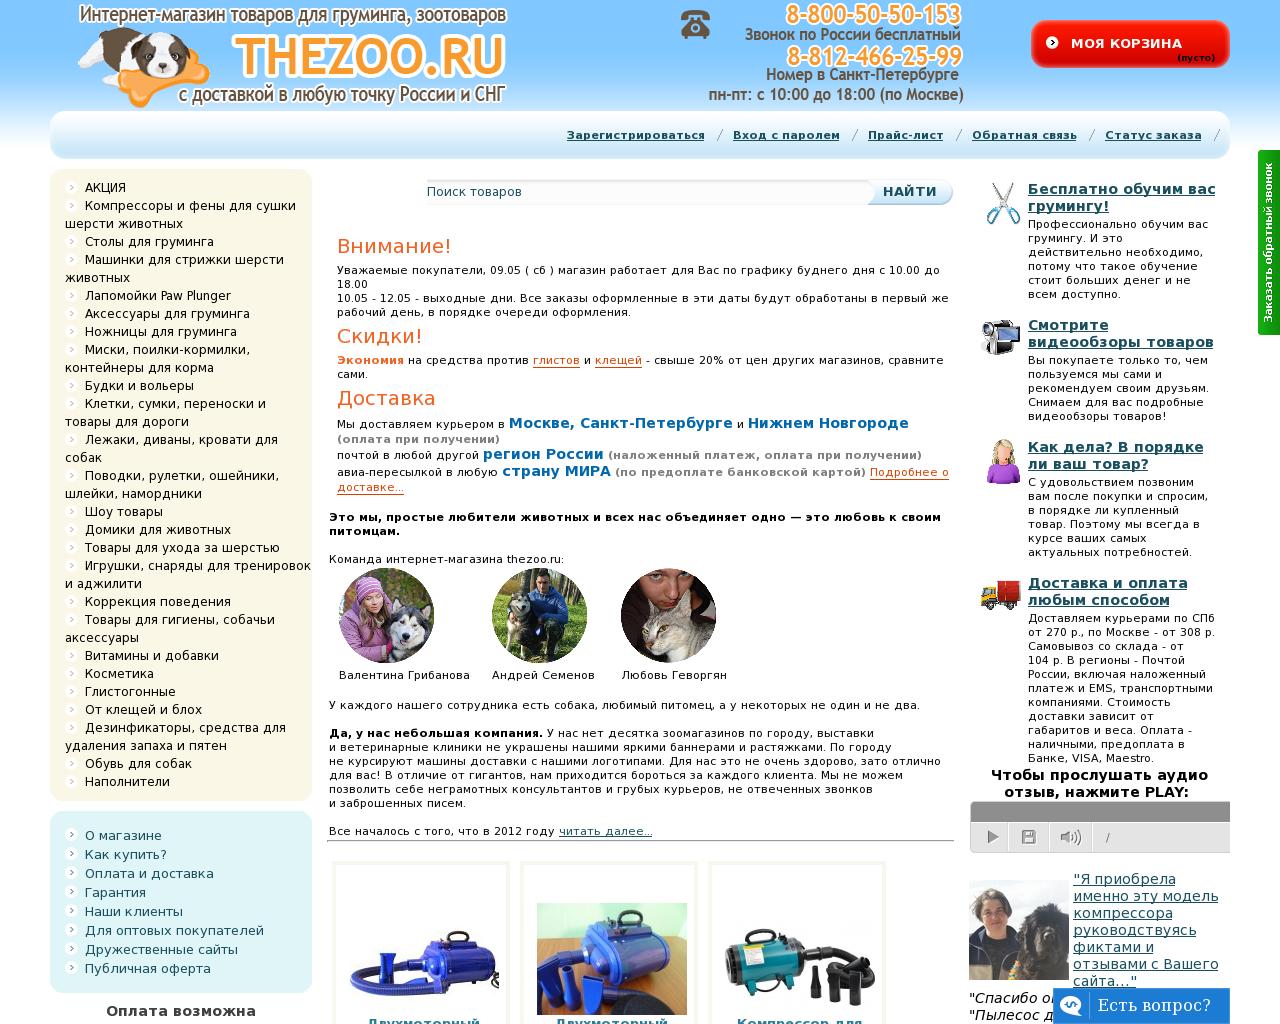 Изображение сайта thezoo.ru в разрешении 1280x1024